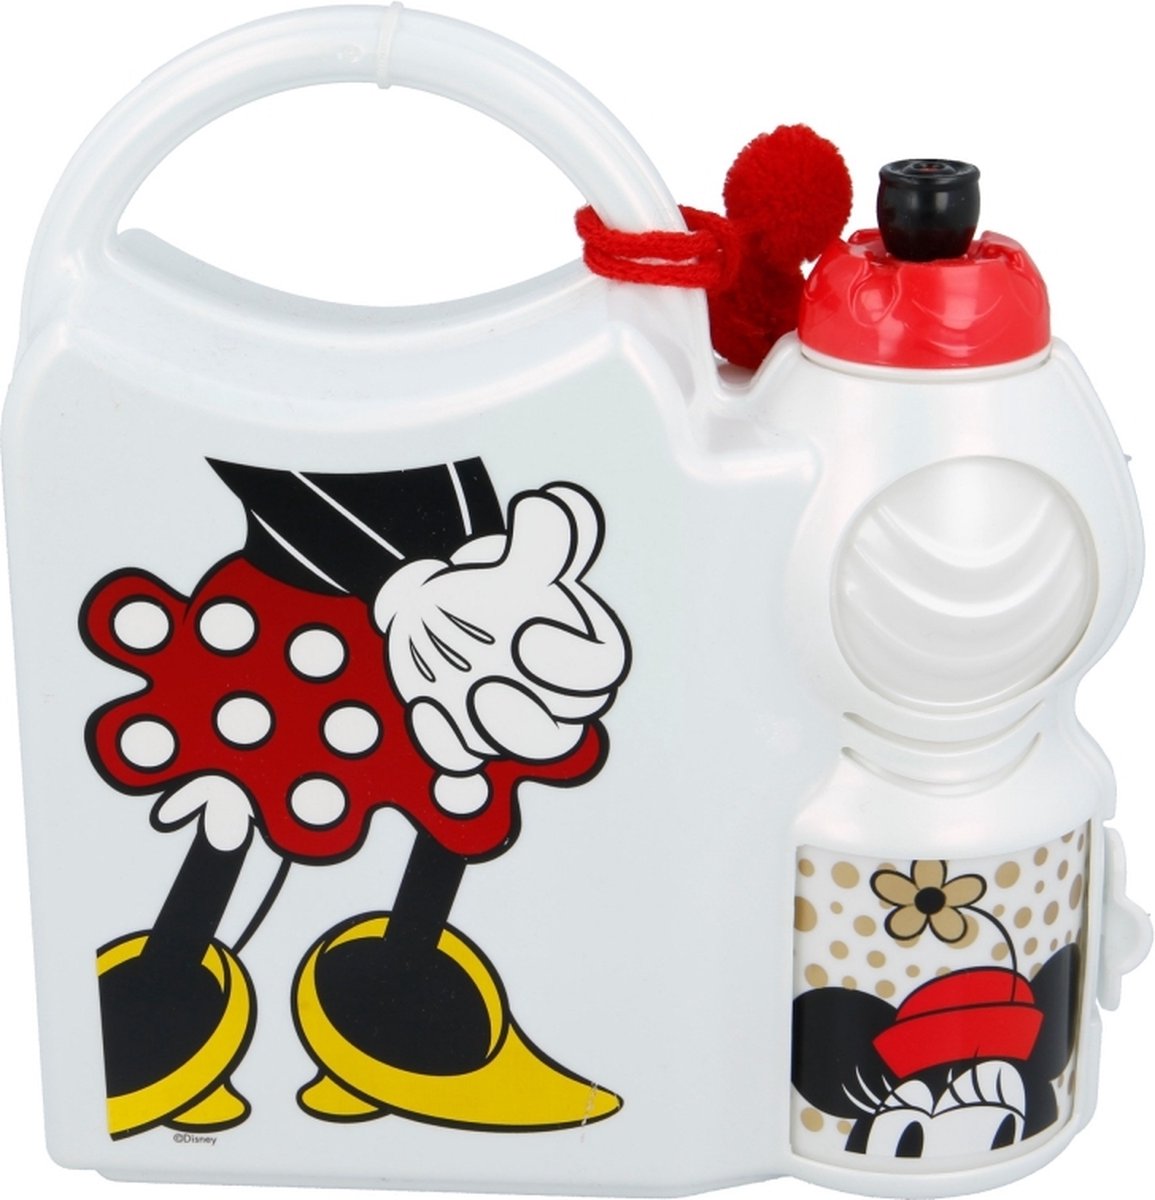 Minnie Mouse broodtrommel met bidon - rood / wit - Disney lunchset